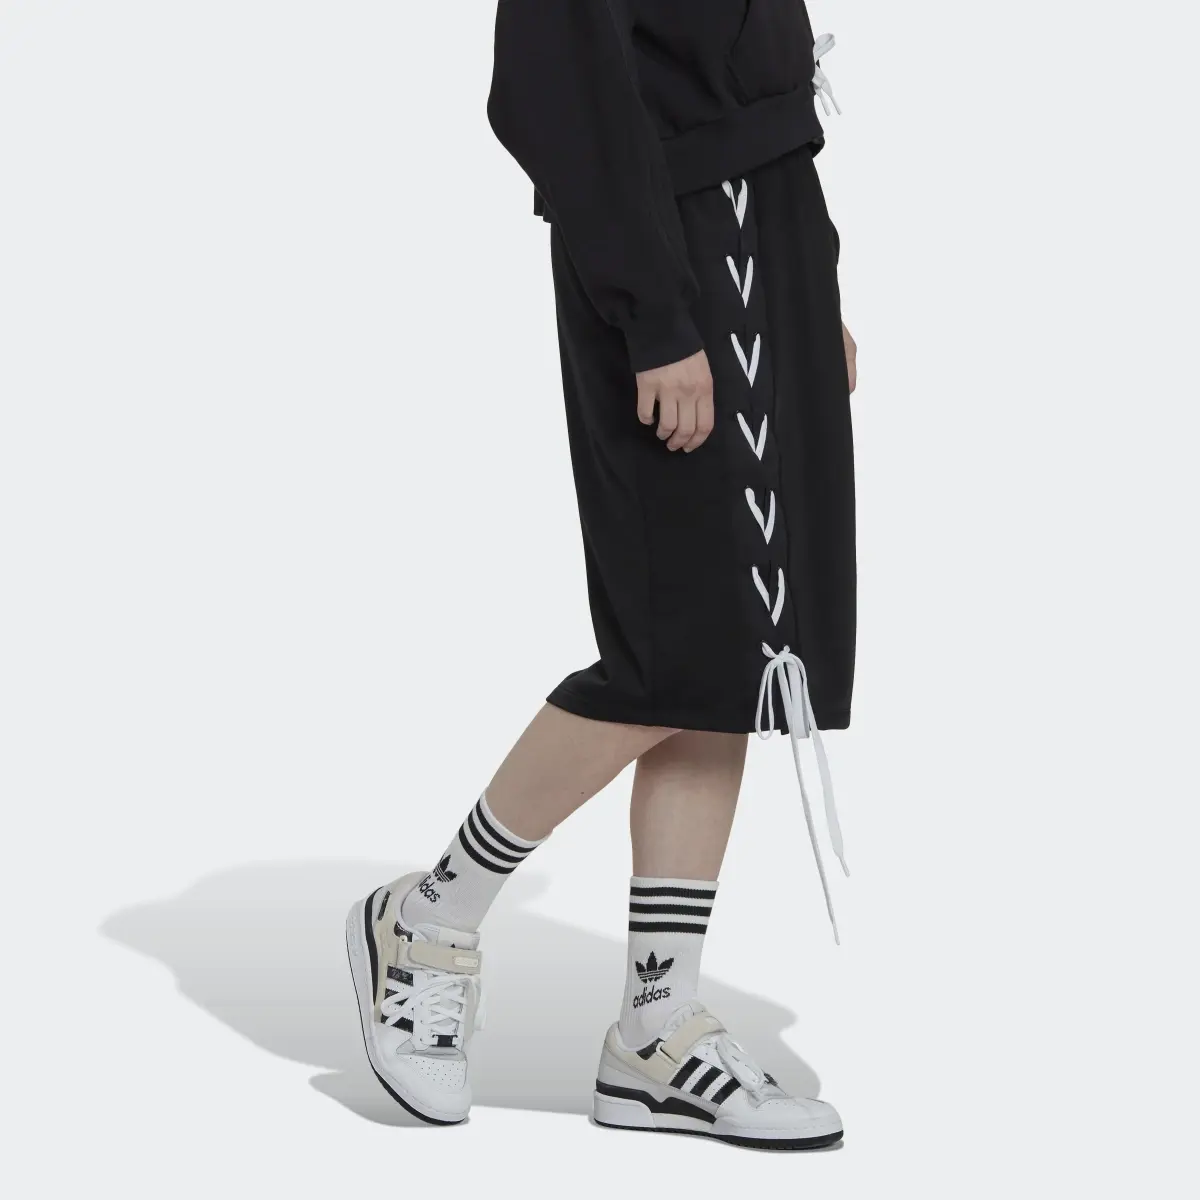 Adidas Always Original Laced Skirt. 3